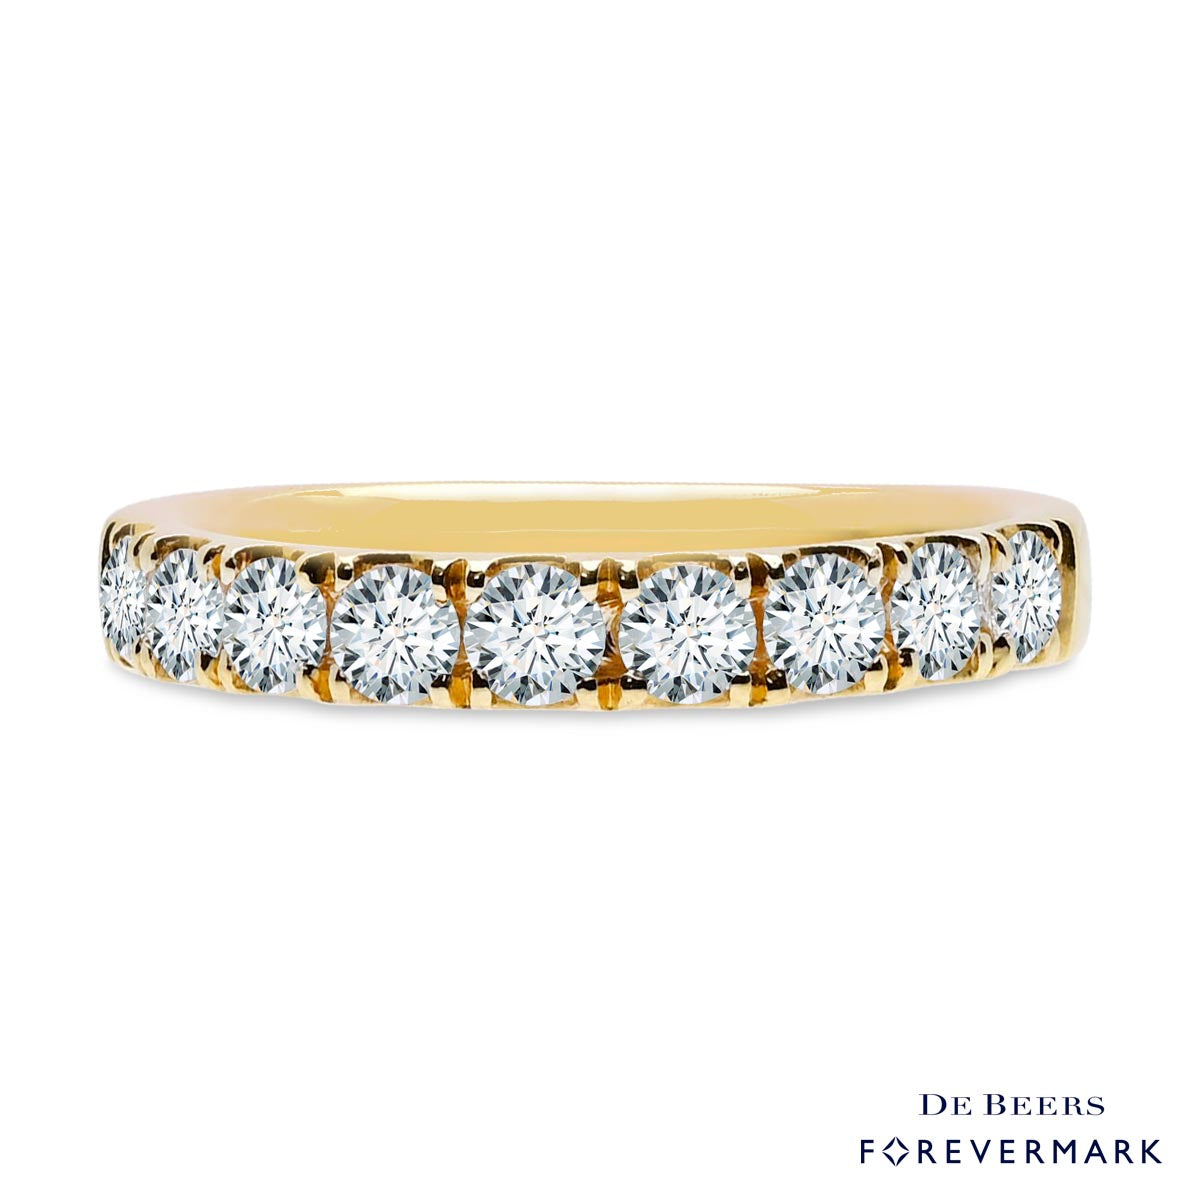 De Beers Forevermark Diamond Wedding Band in 18kt Yellow Gold (3/4ct tw)